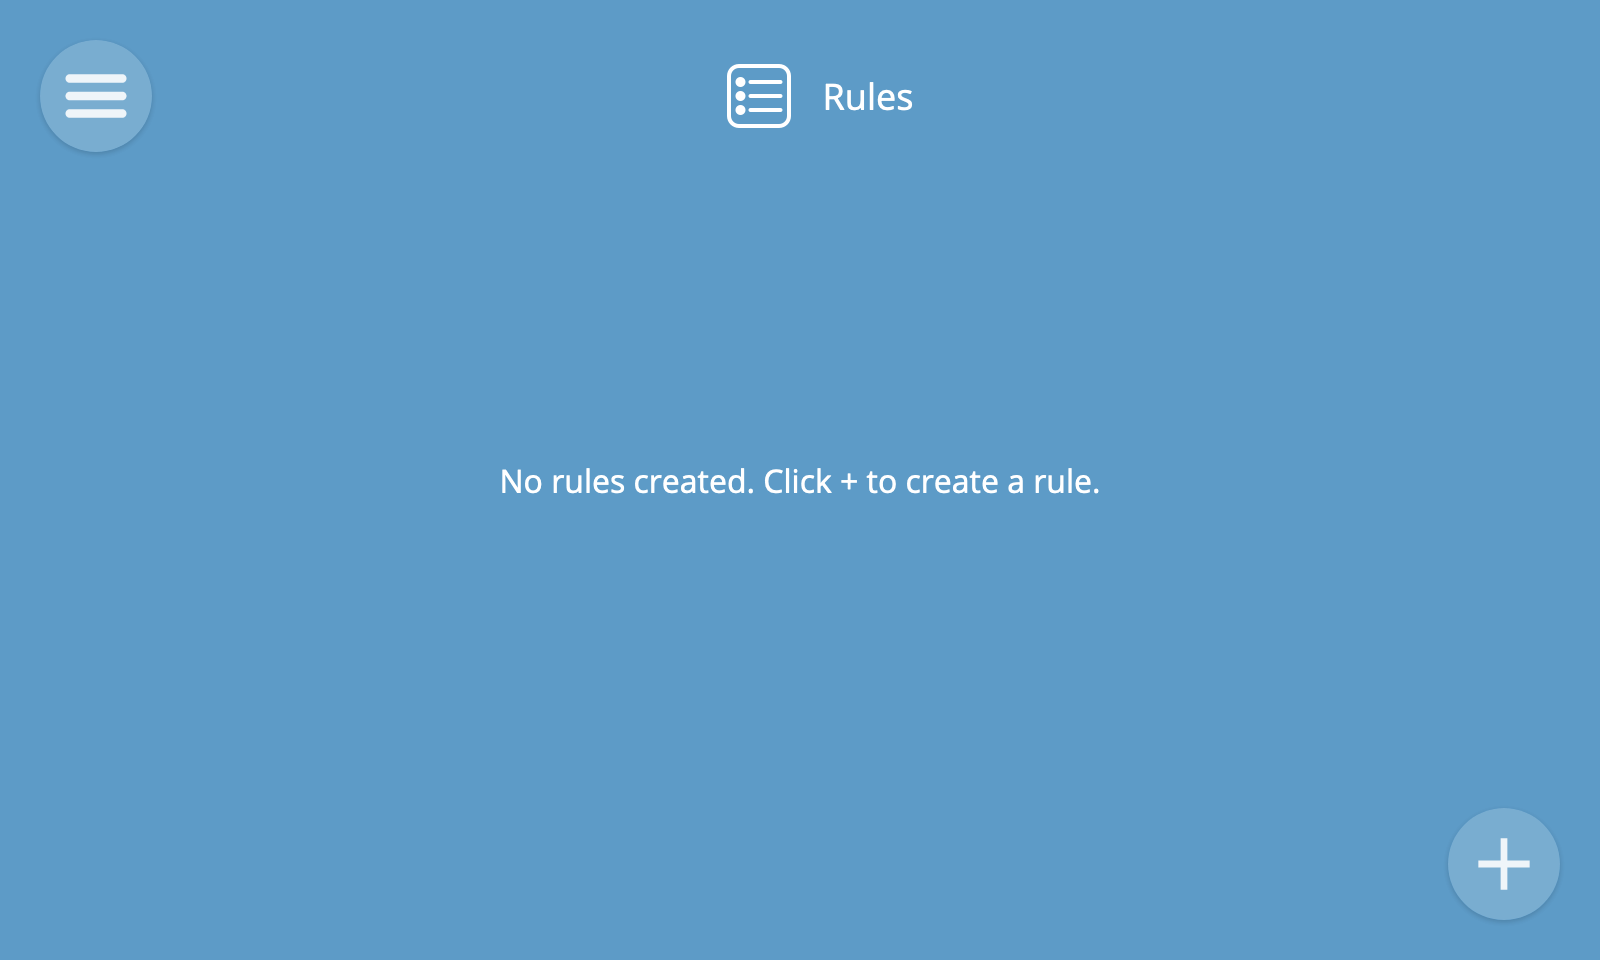 Screenshot of the empty rules screen